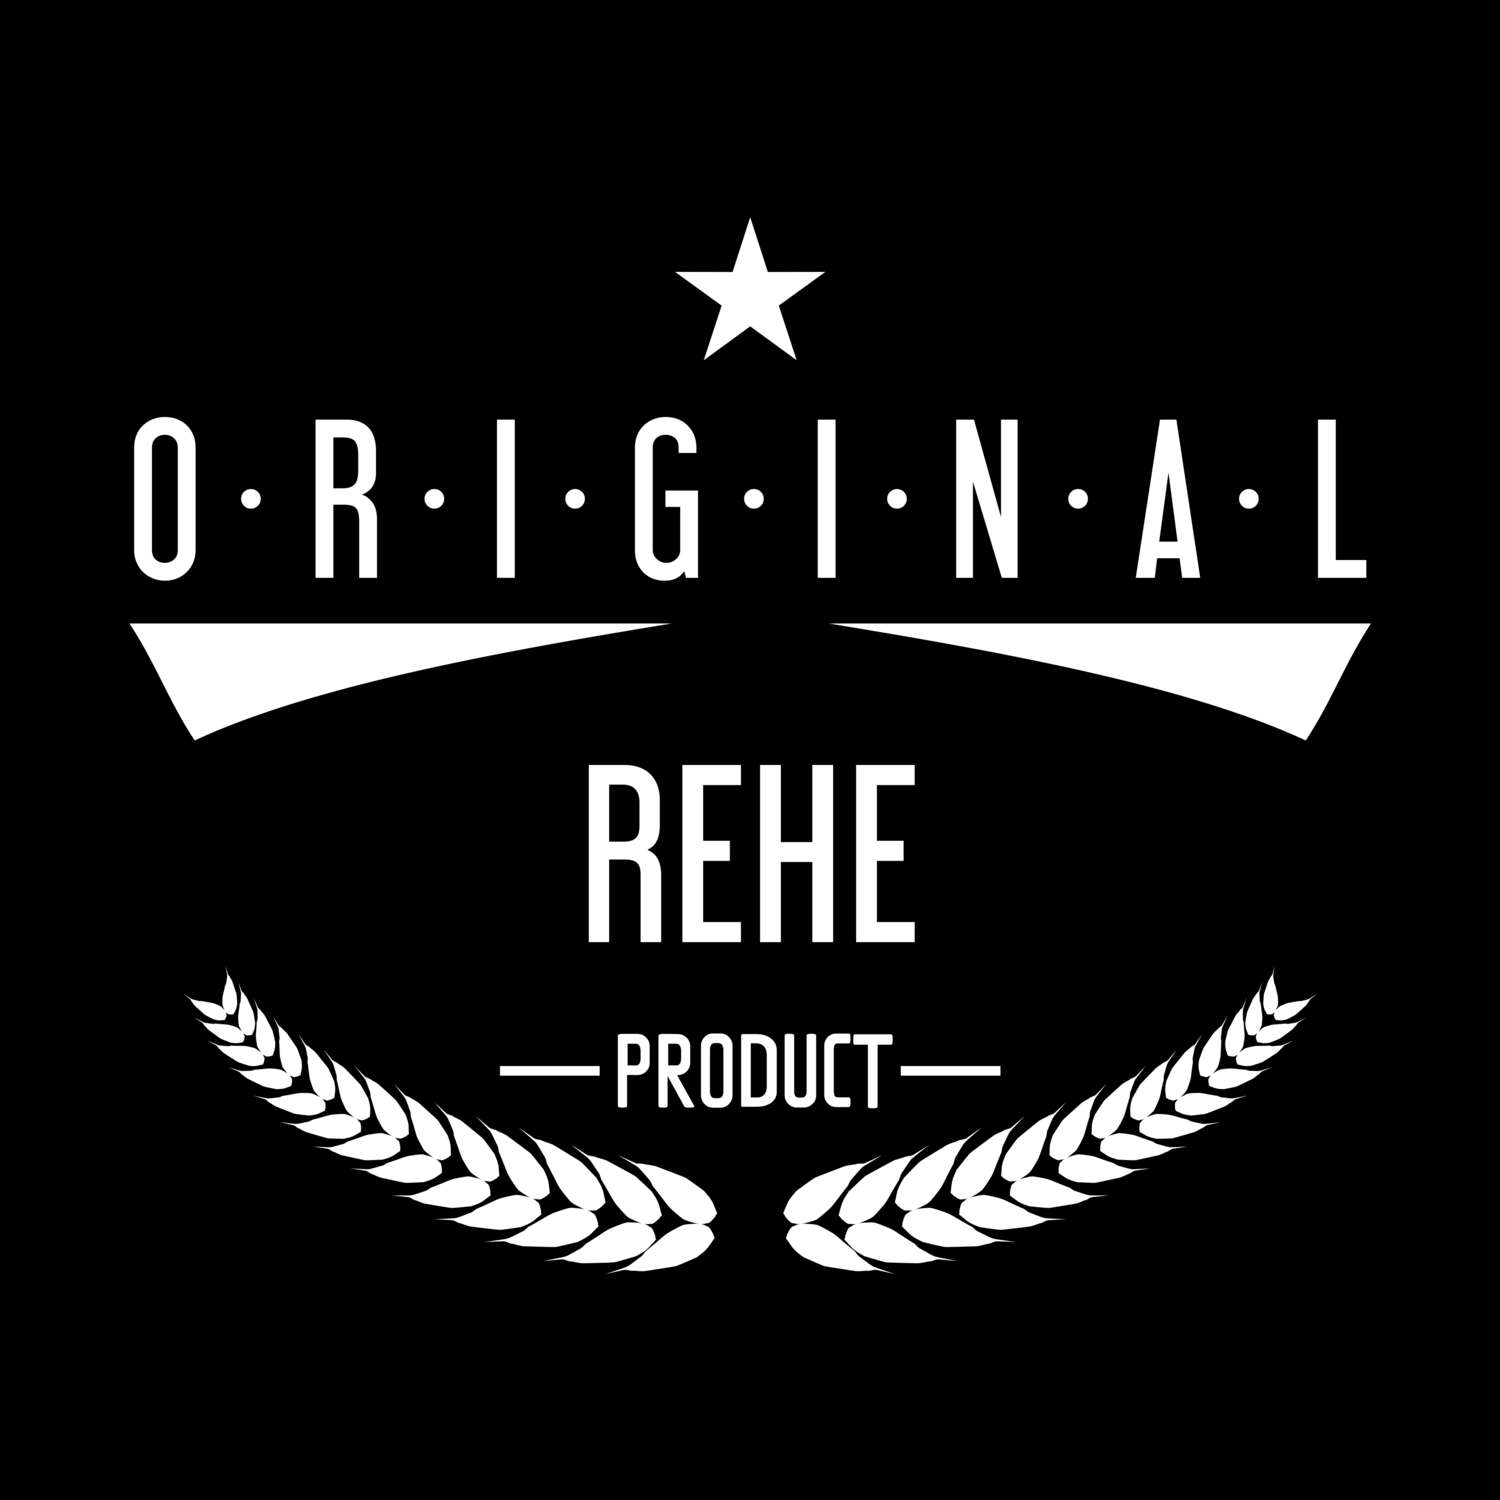 Rehe T-Shirt »Original Product«